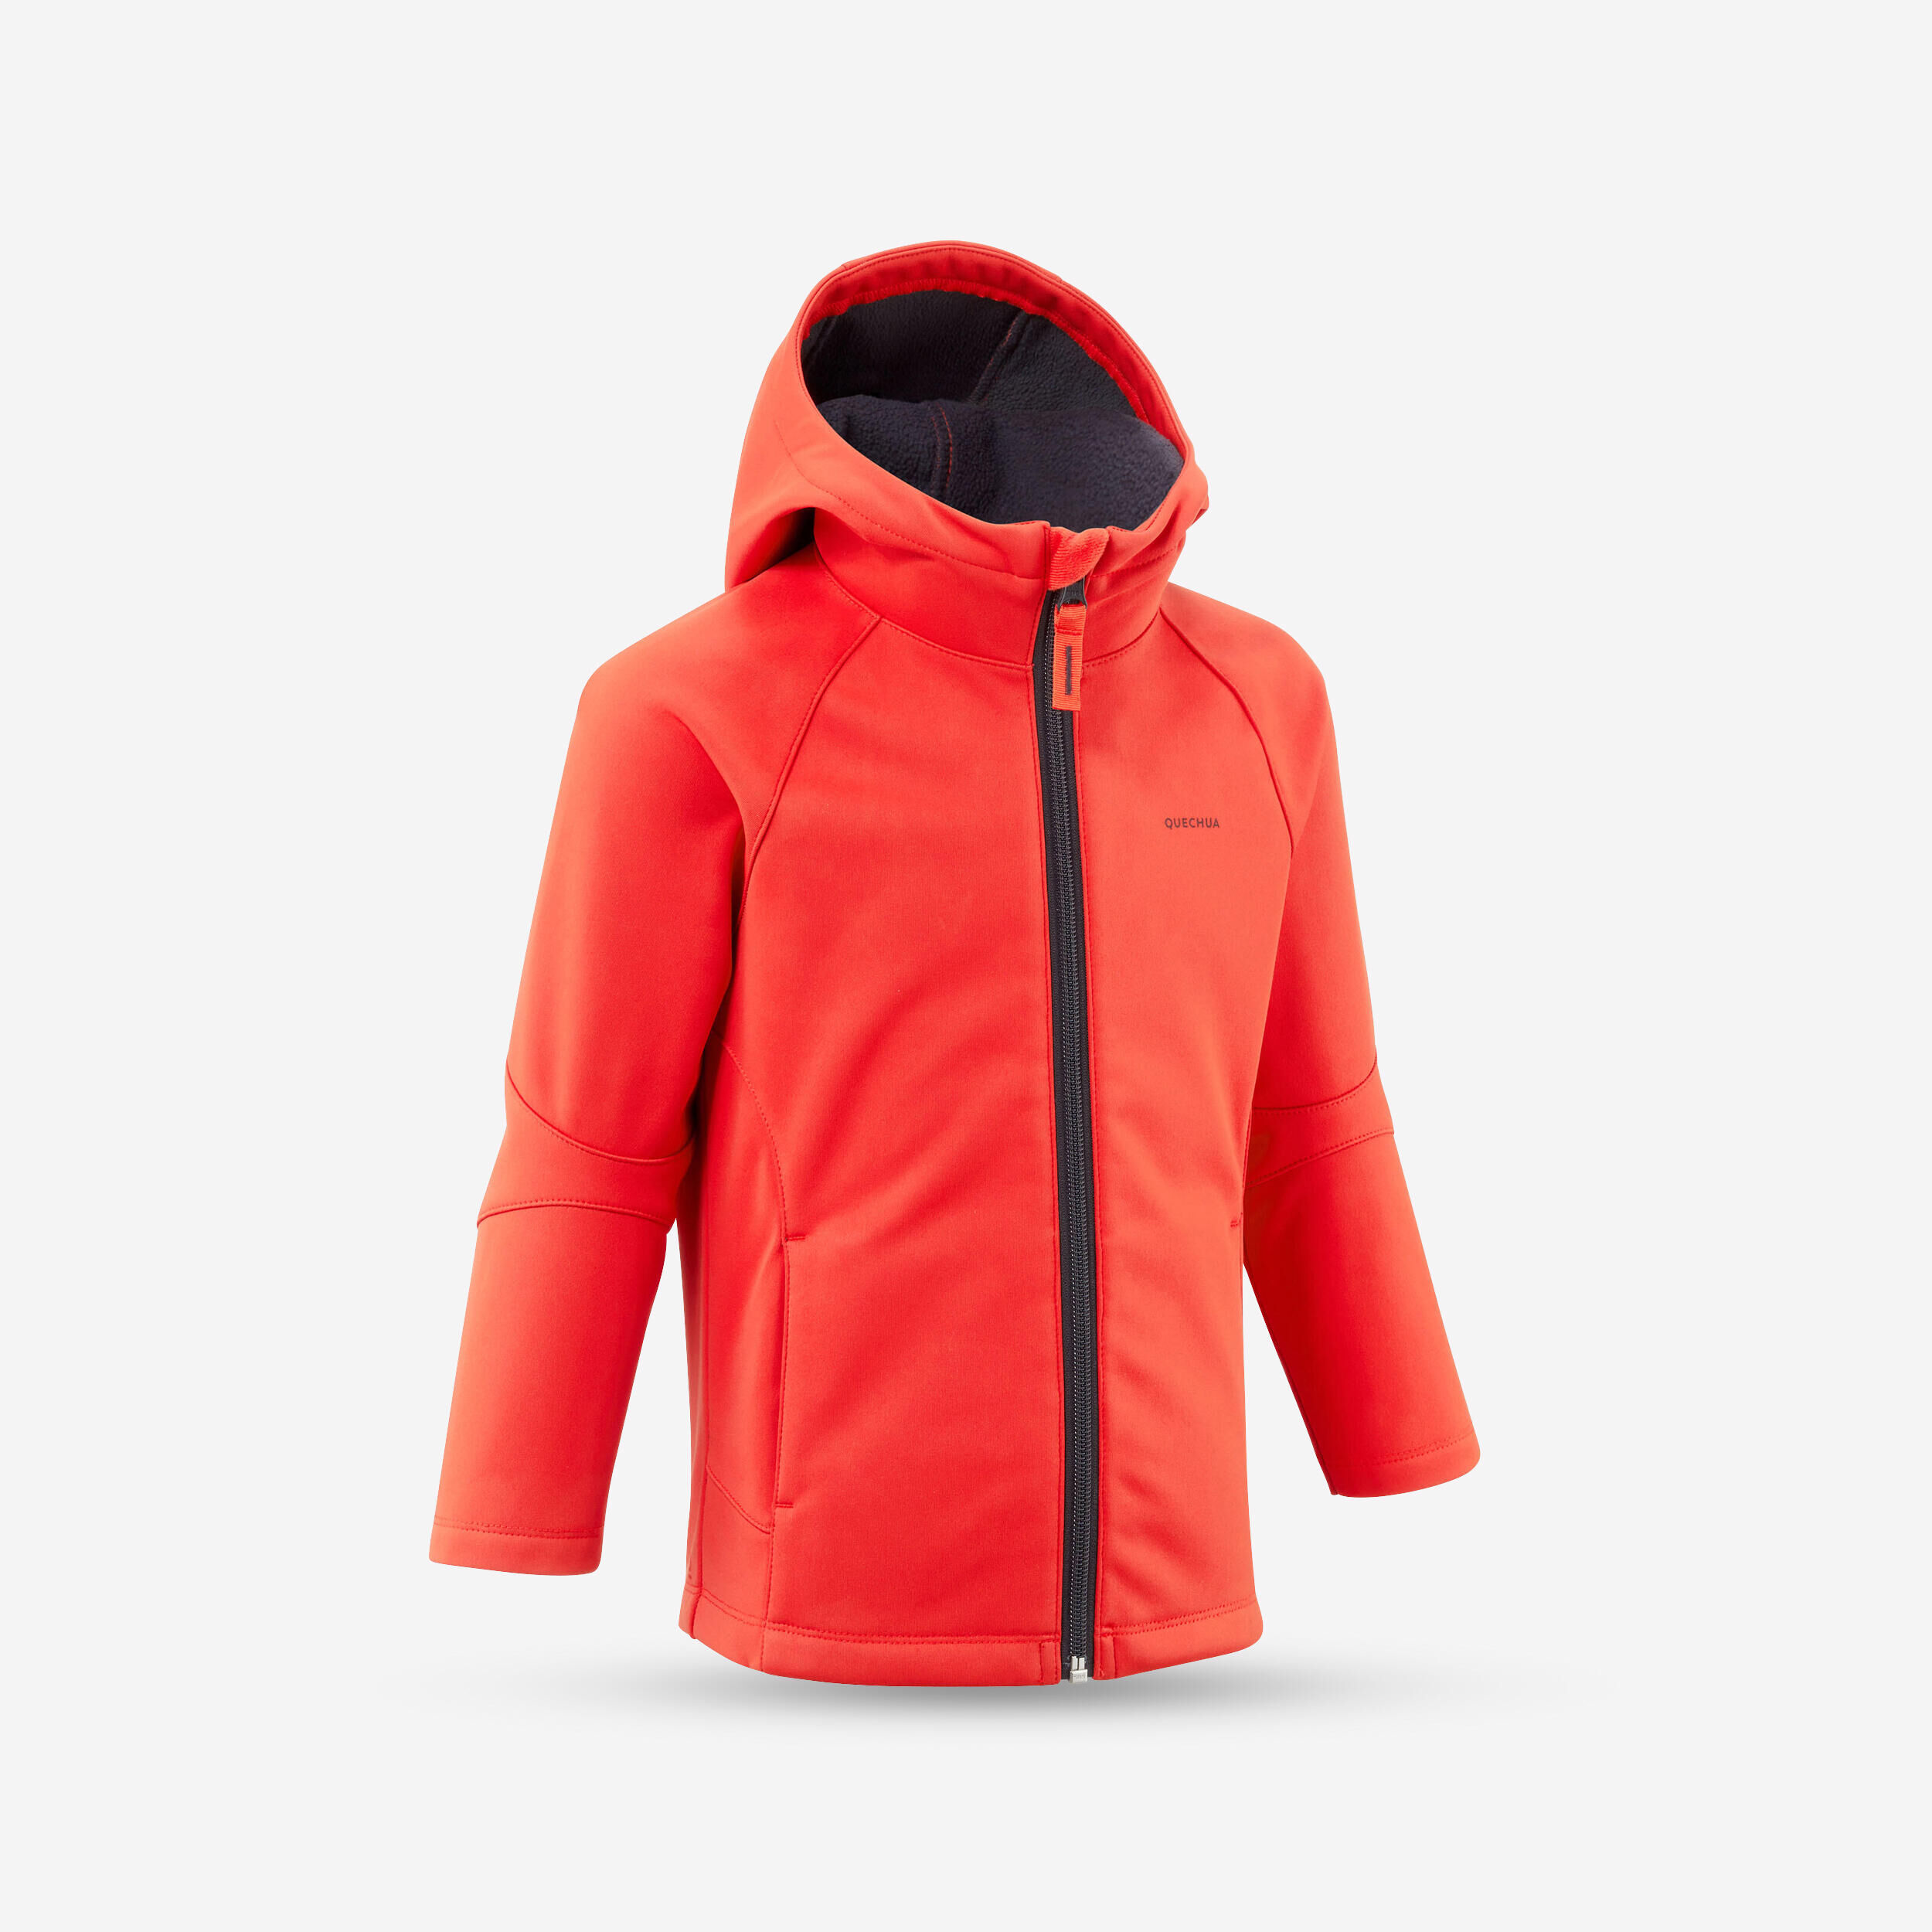 QUECHUA Softshell Hiking jacket - MH550 Bright Orange - Ages 2-6